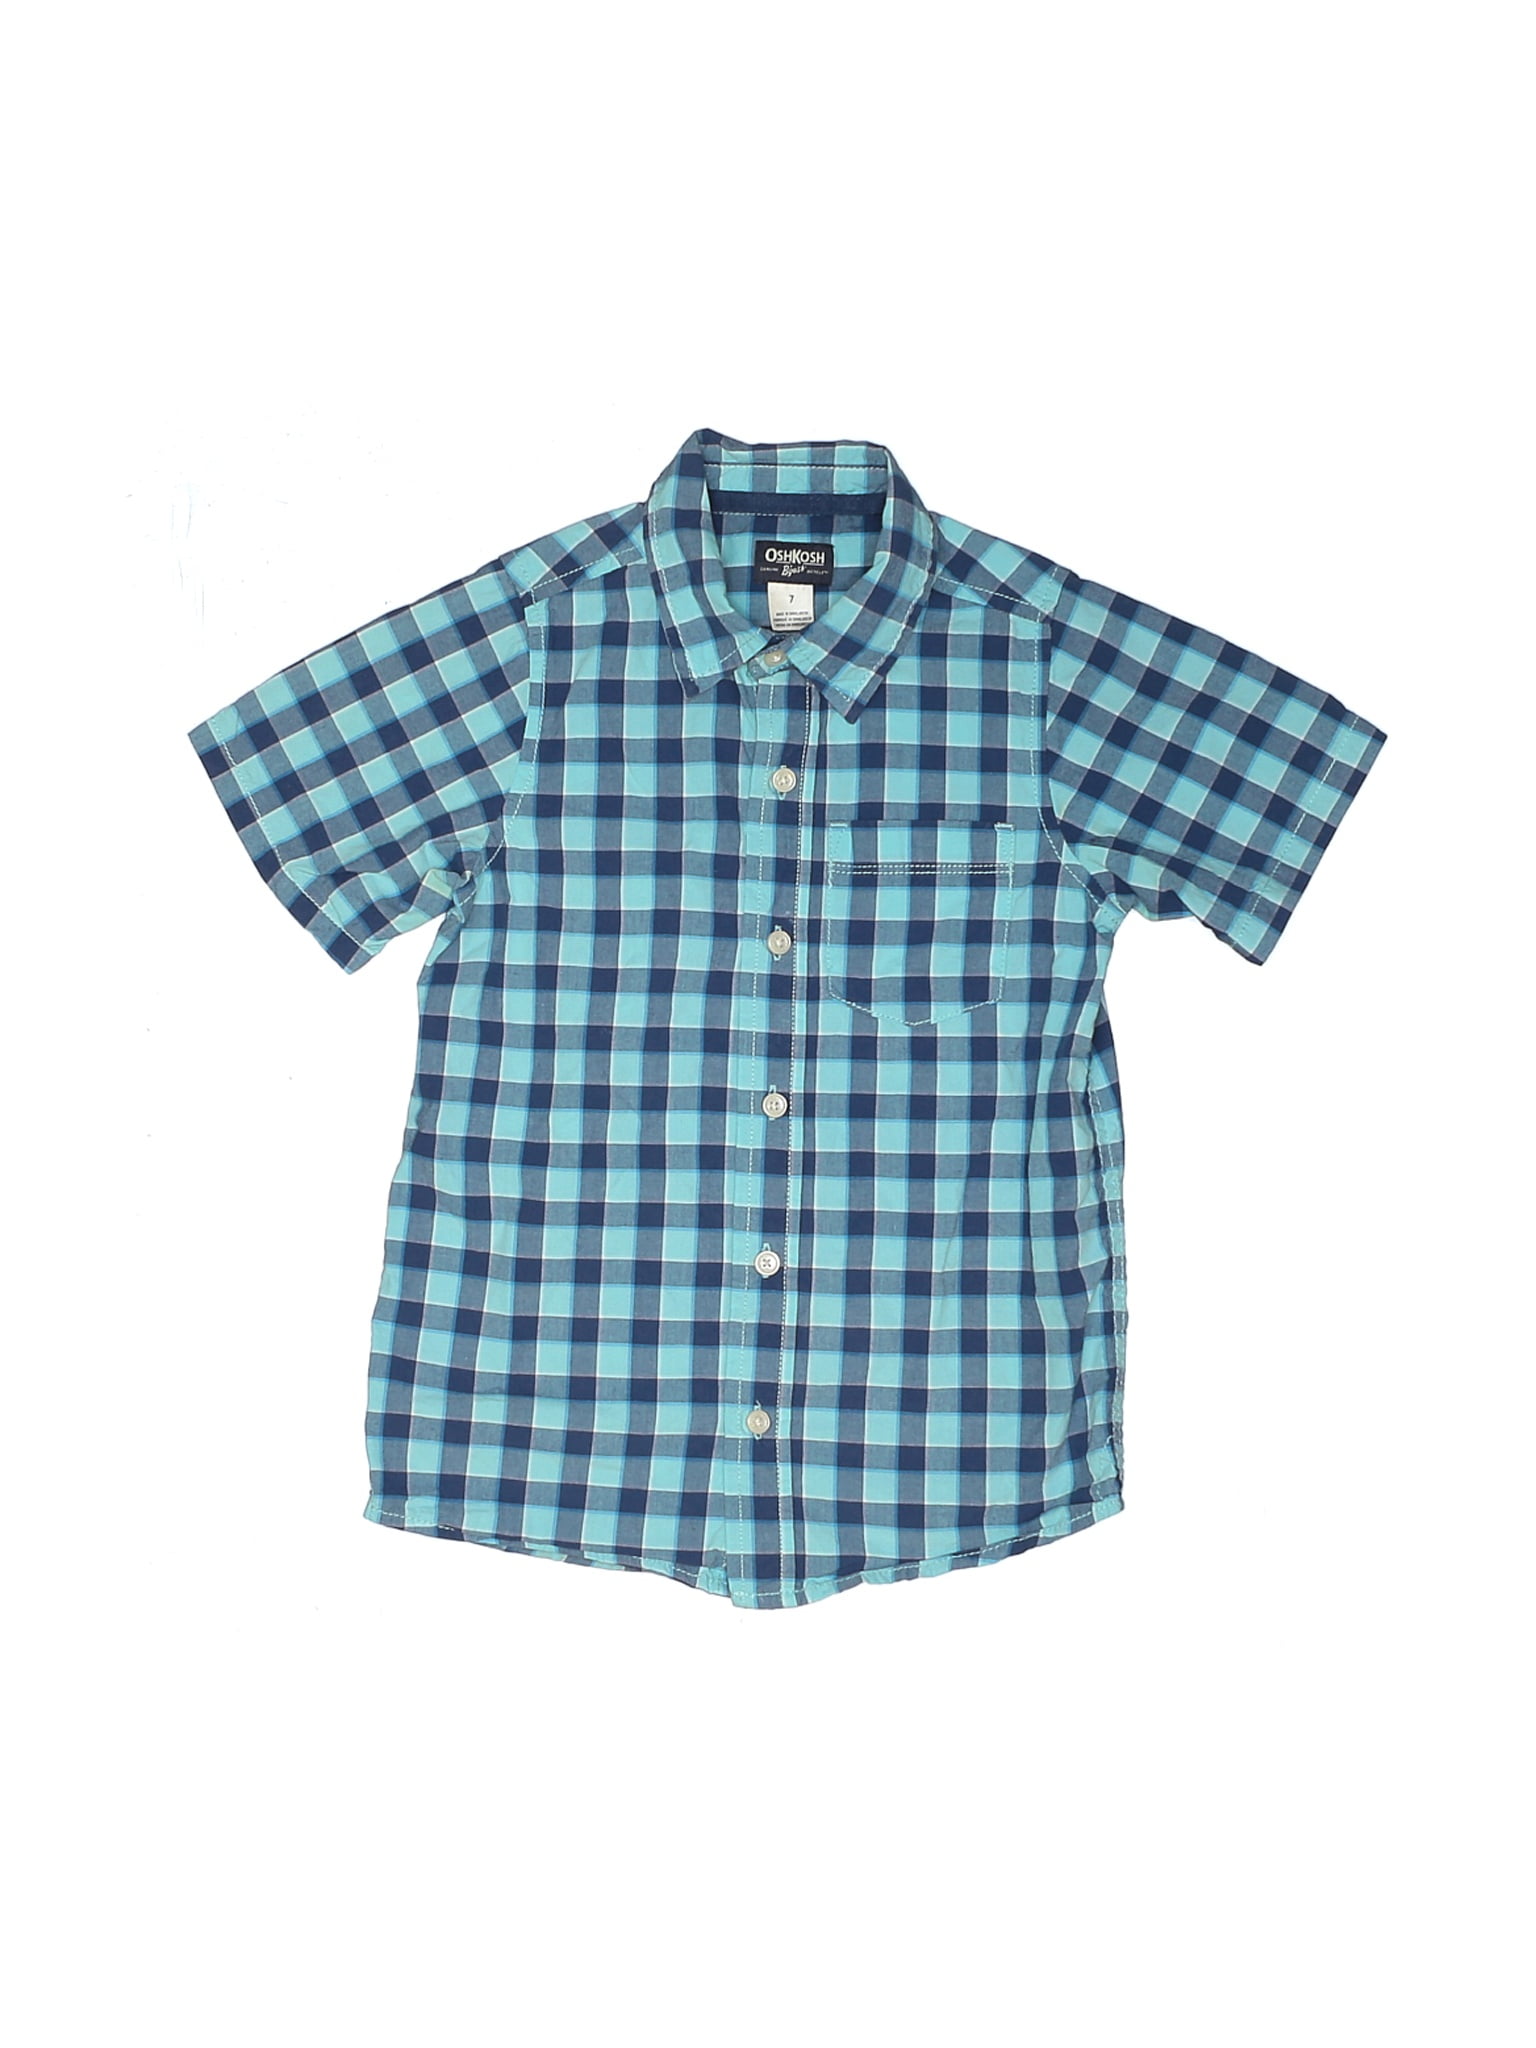 OSHKOSH B'GOSH Boys Short Sleeve Button-Front Shirt Blue w/ Cool Pineapples NWT